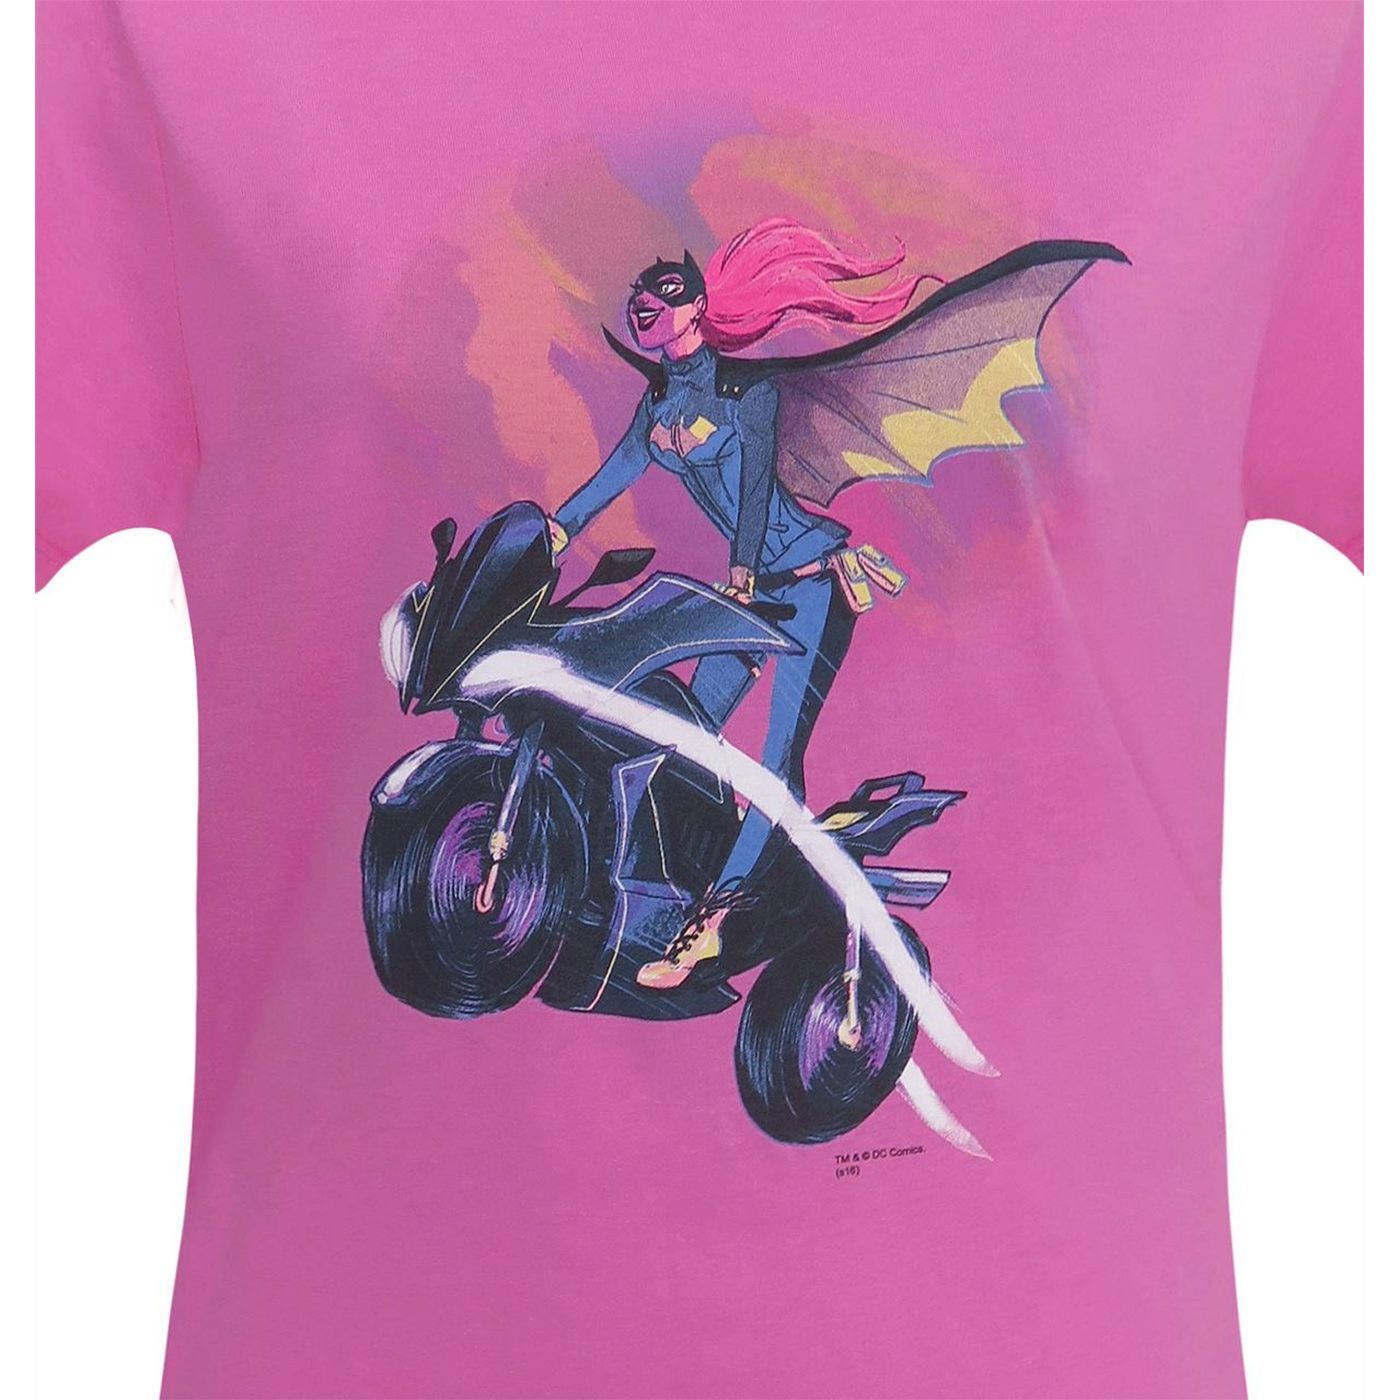 Batgirl Bat-Cycle Soar Women's T-Shirt